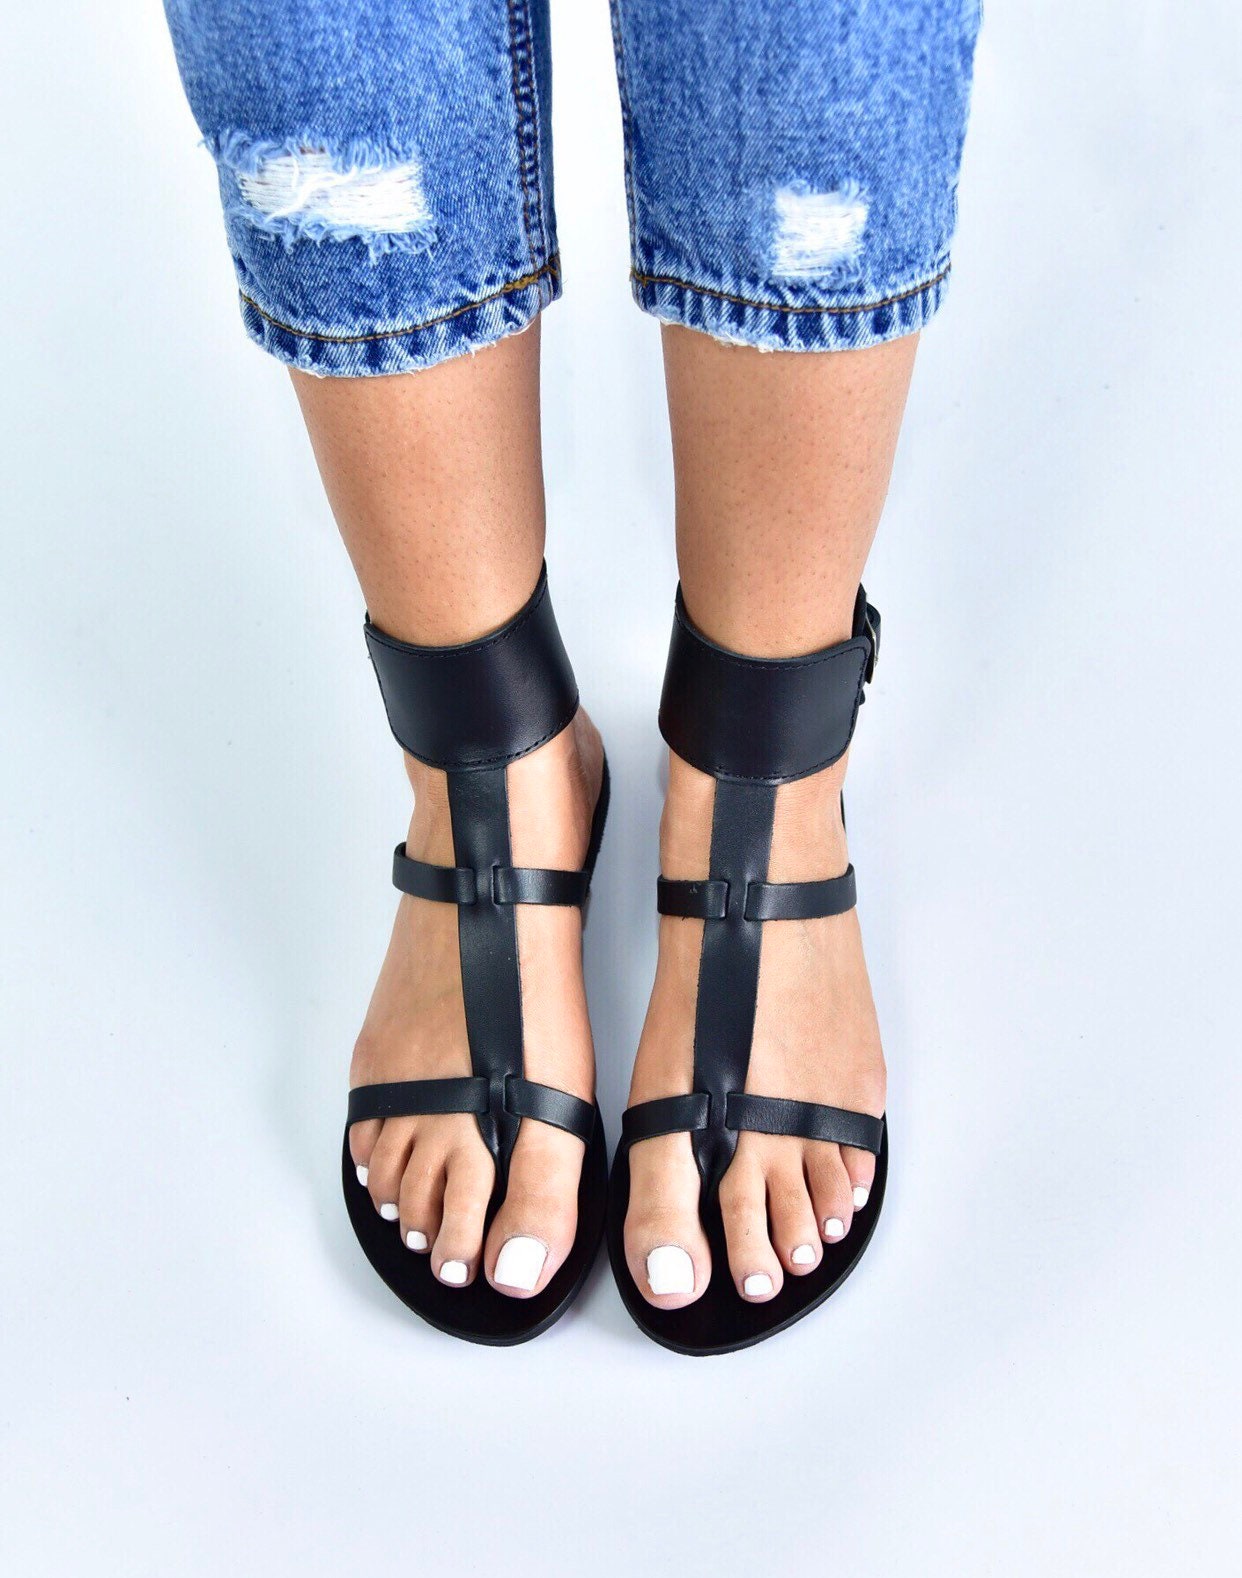 Leather sandals Black sandals Women sandals Greek sandals | Etsy